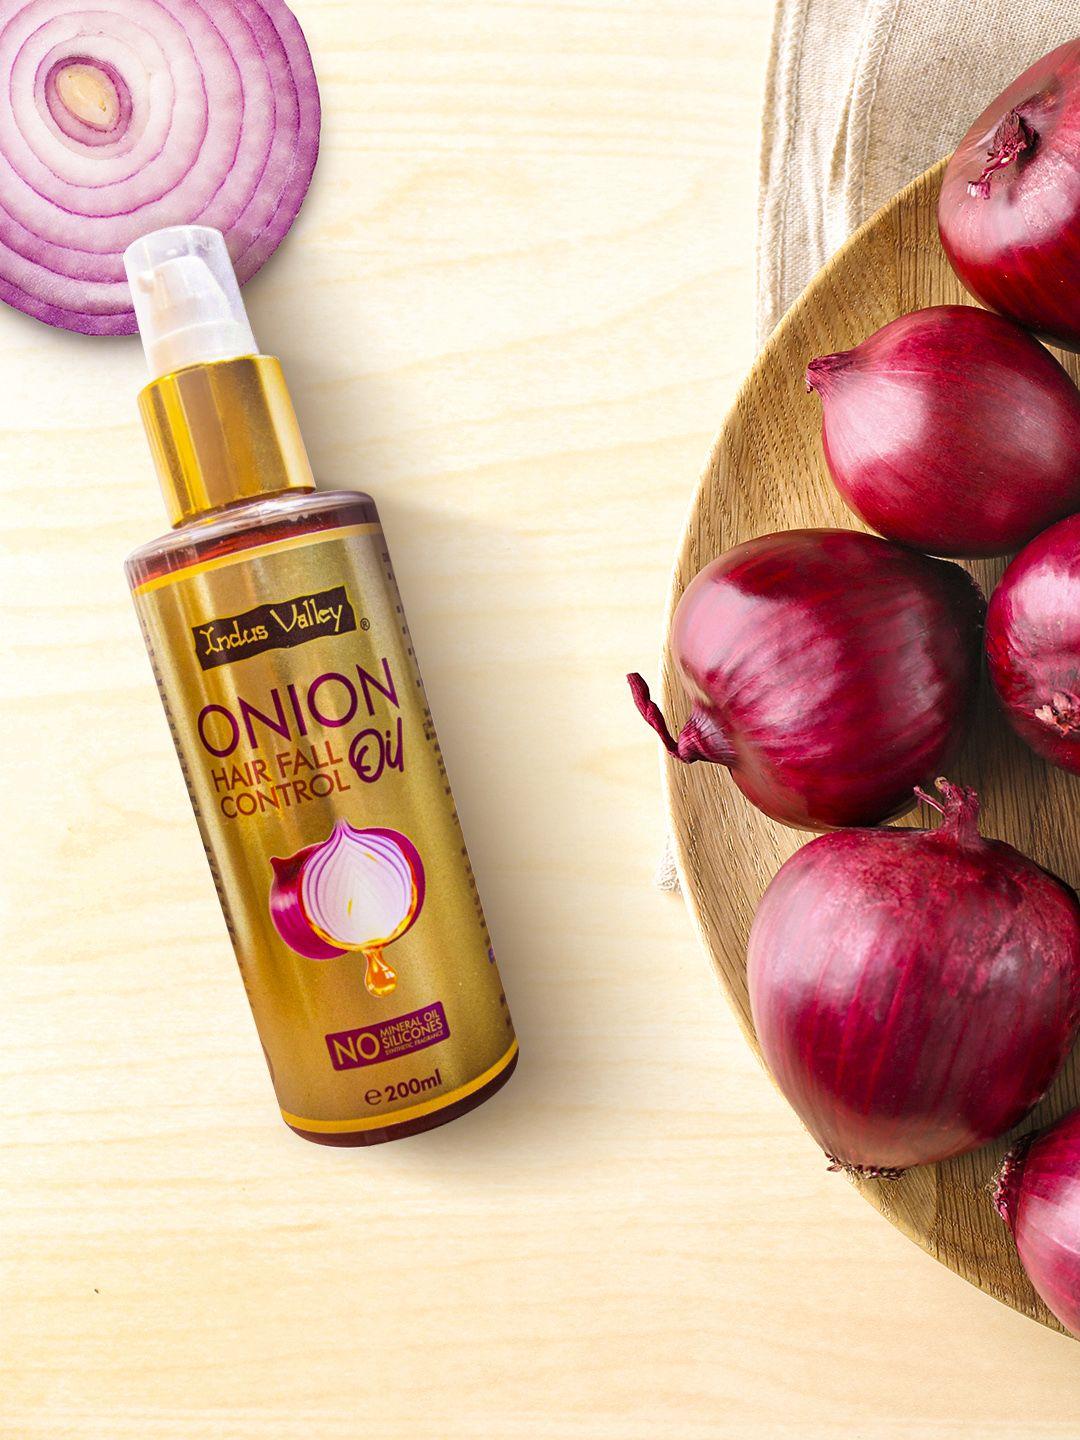 indus valley onion hair fall control oil 200 ml